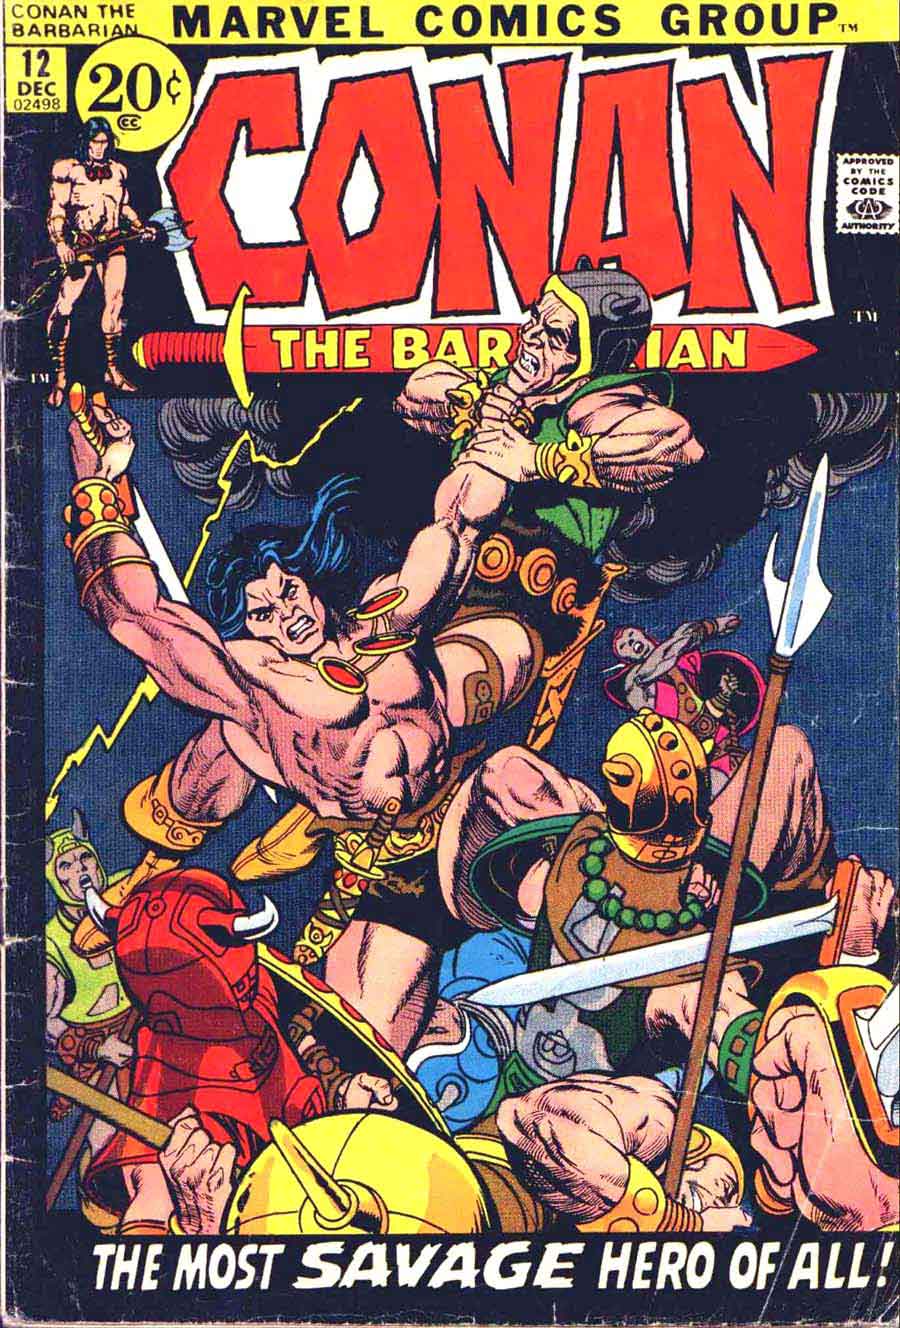 Conan the Barbarian v1 #12 marvel comic book cover art by Bernie Wrightson